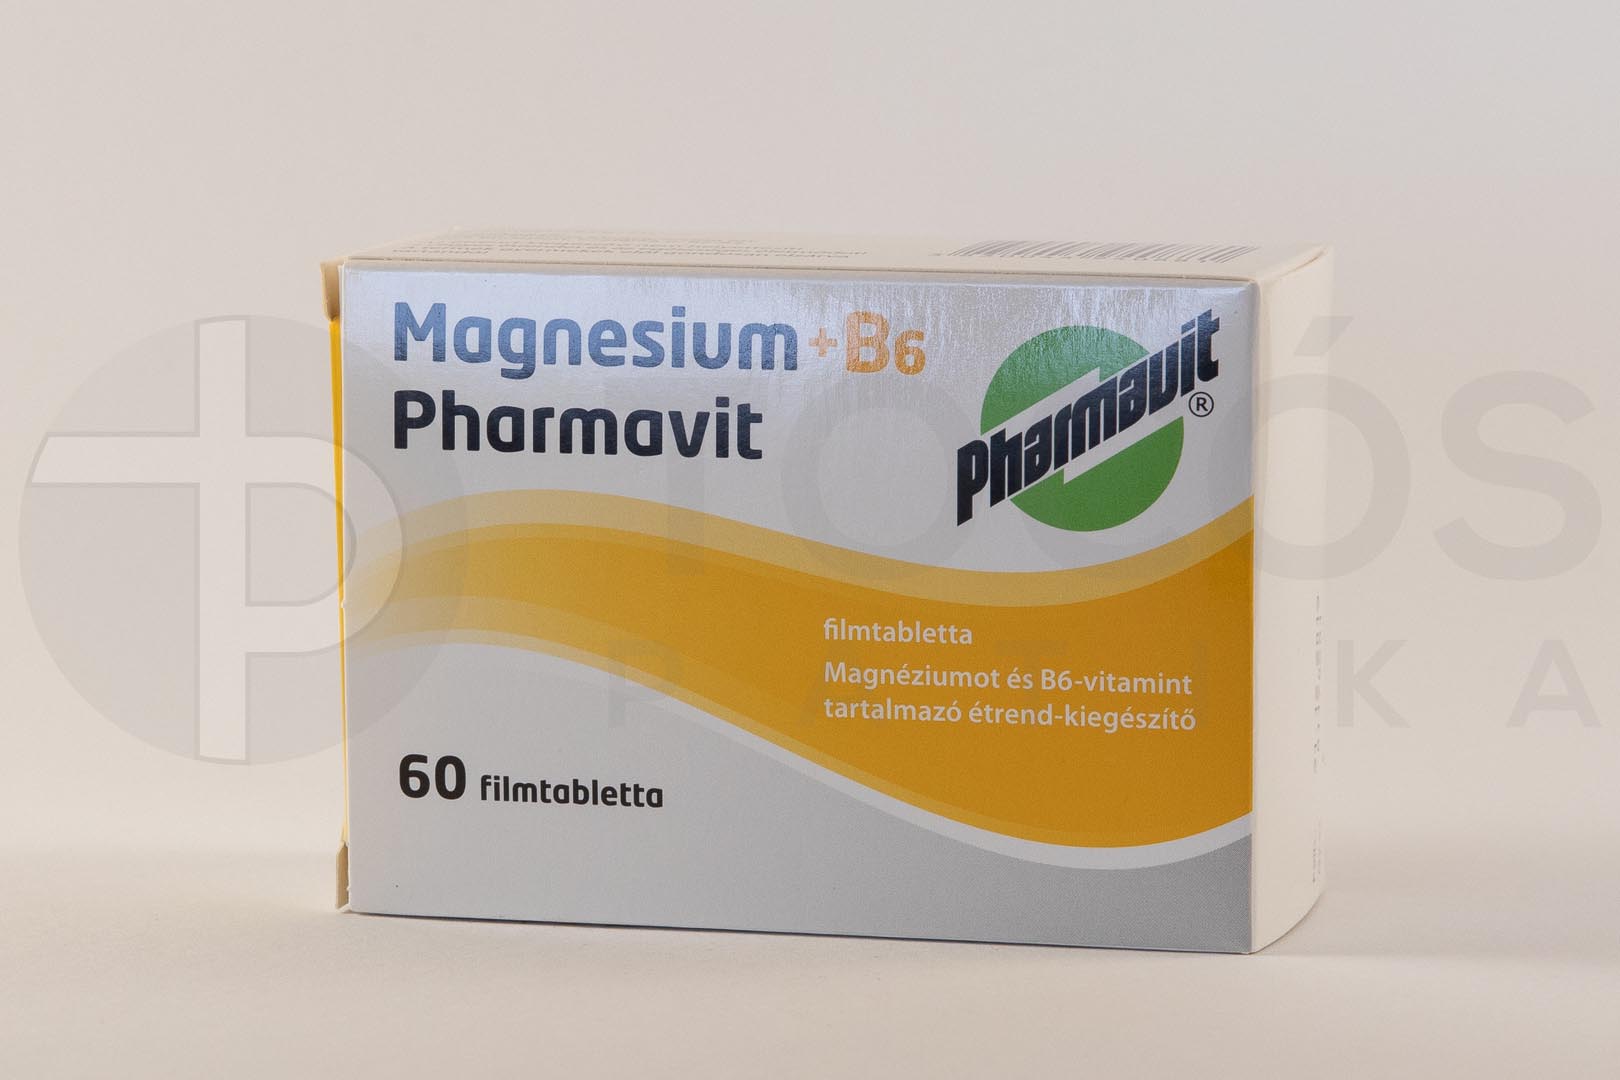 Magnesium+ B6 Pharmavit filmtabletta 60x